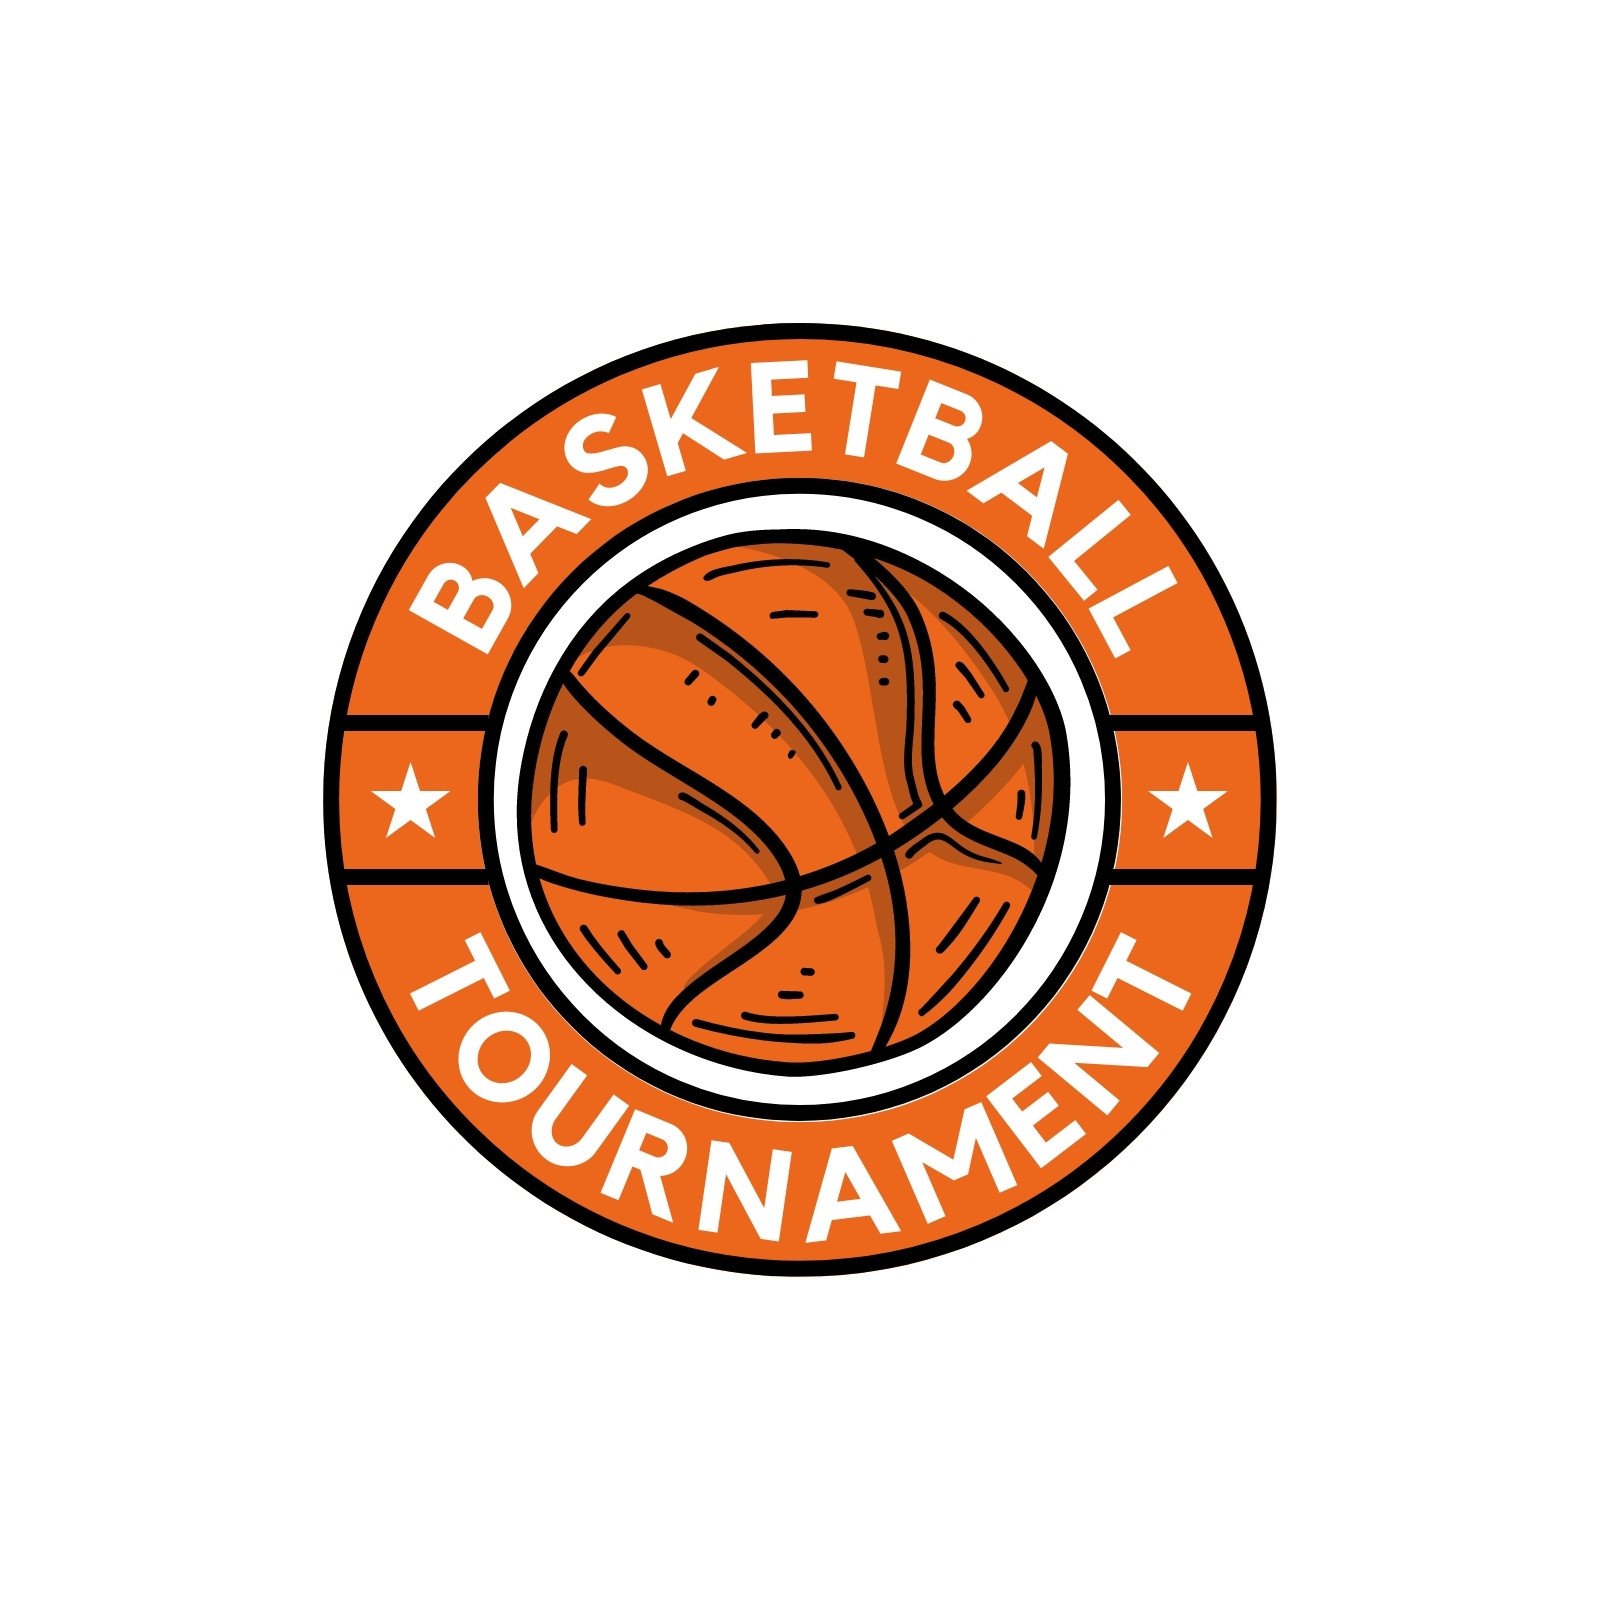 basketball logo designs